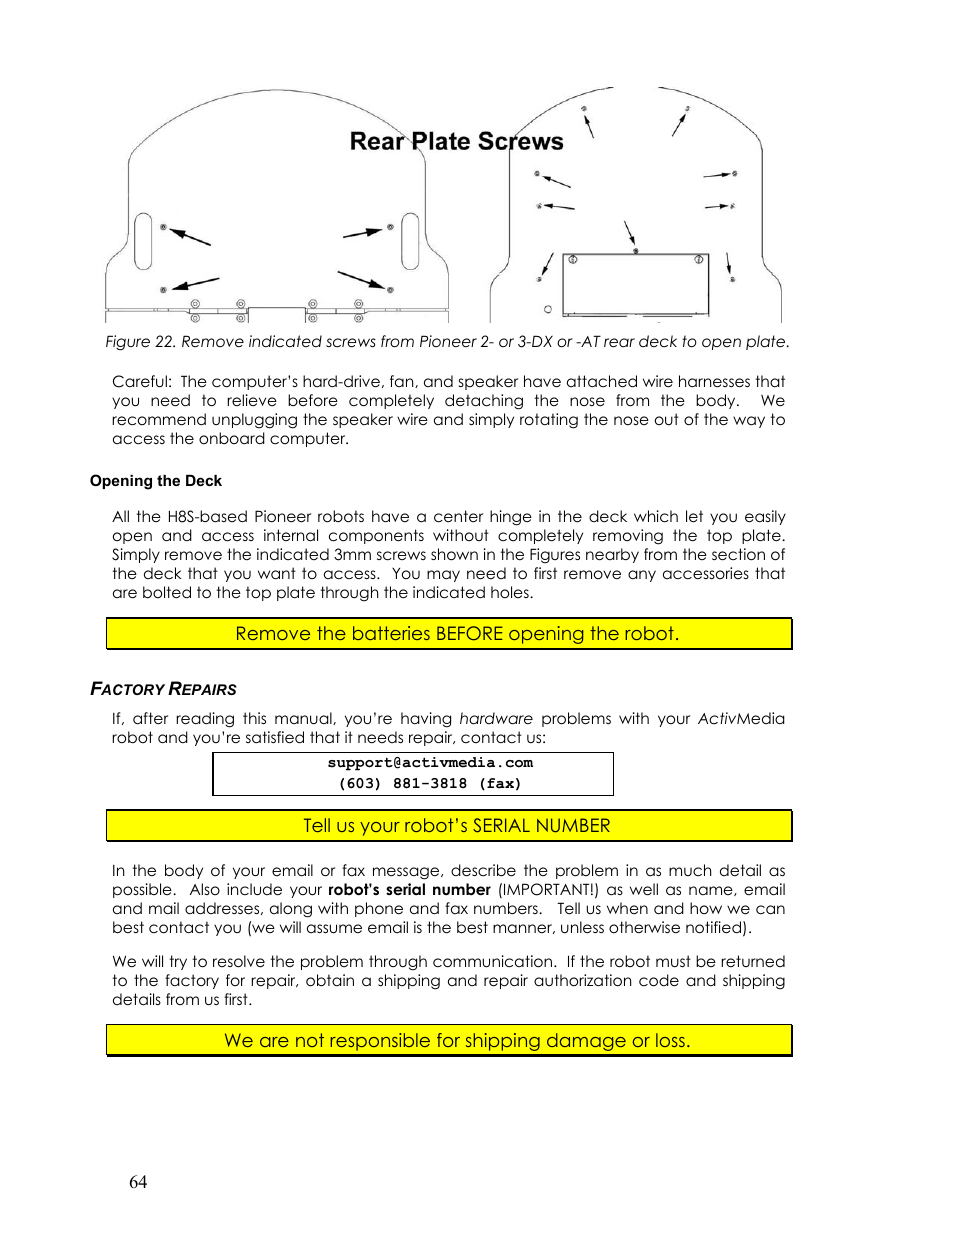 Opening the deck, Factory repairs, Actory | Epairs | Pioneer 2TM User Manual | Page 70 / 85